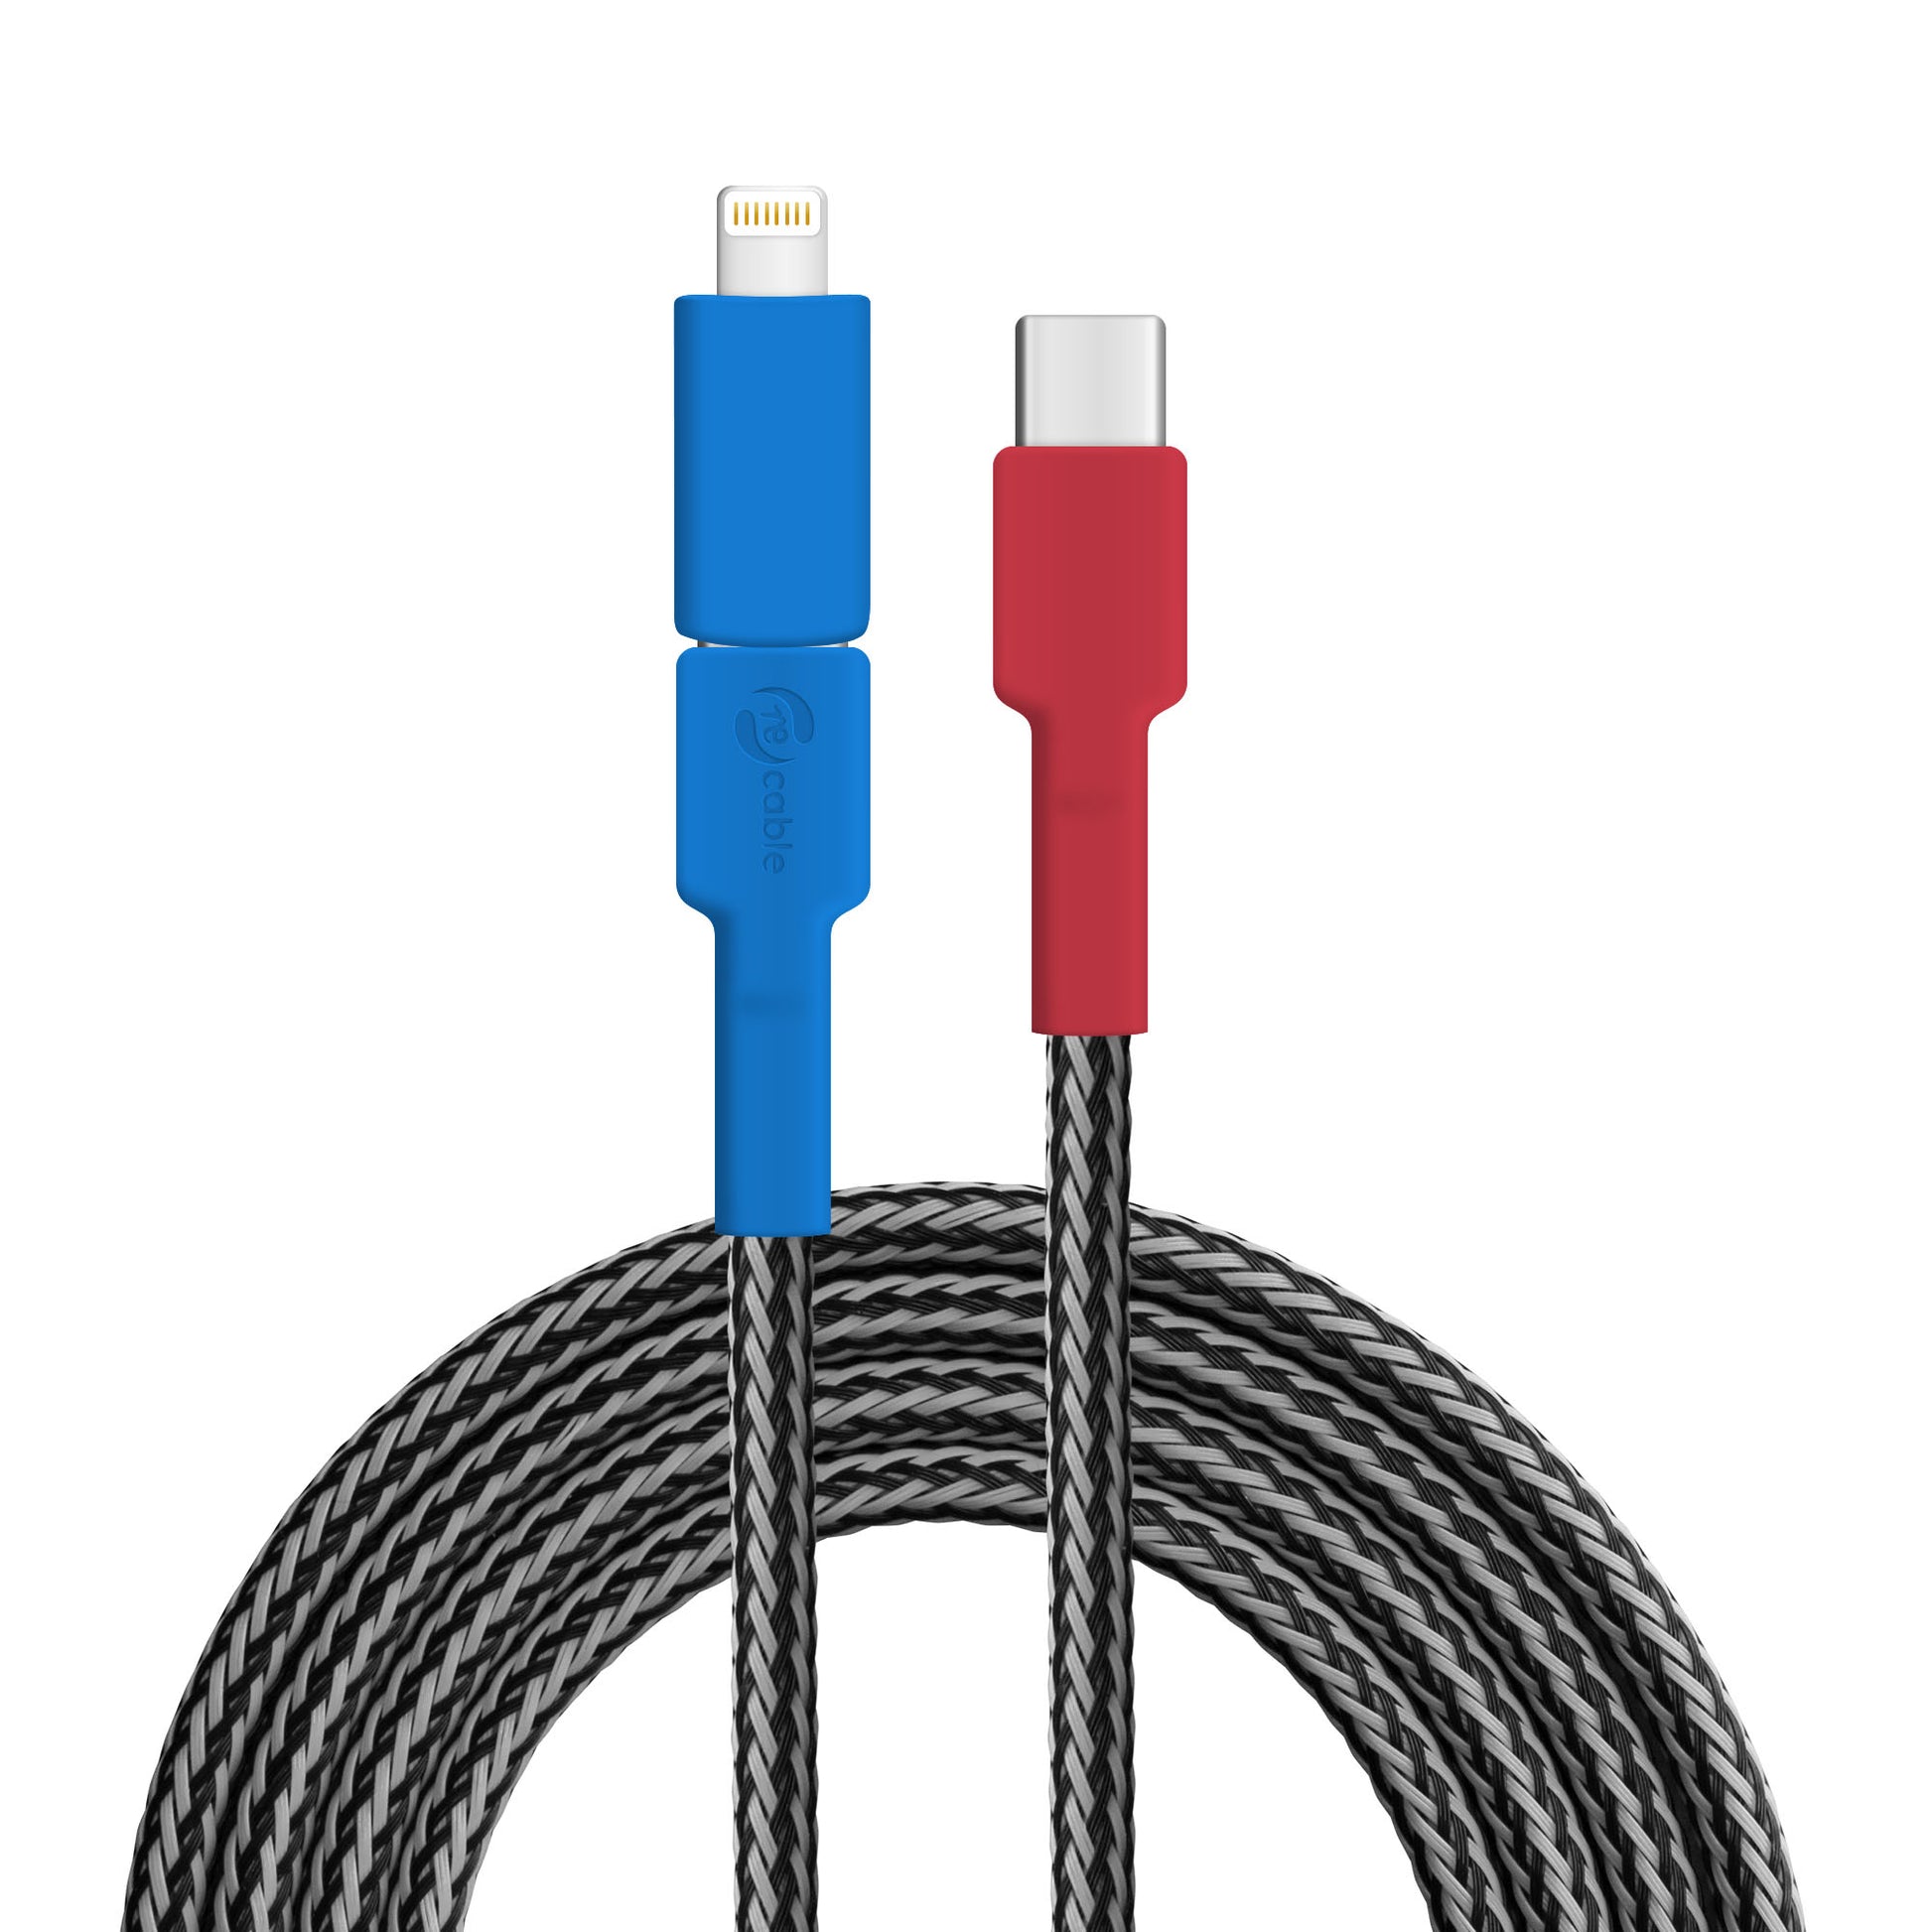 USB-Kabel, Design: Helmkasuar, Anschlüsse: USB C auf USB C mit Lightning Adapter (verbunden)